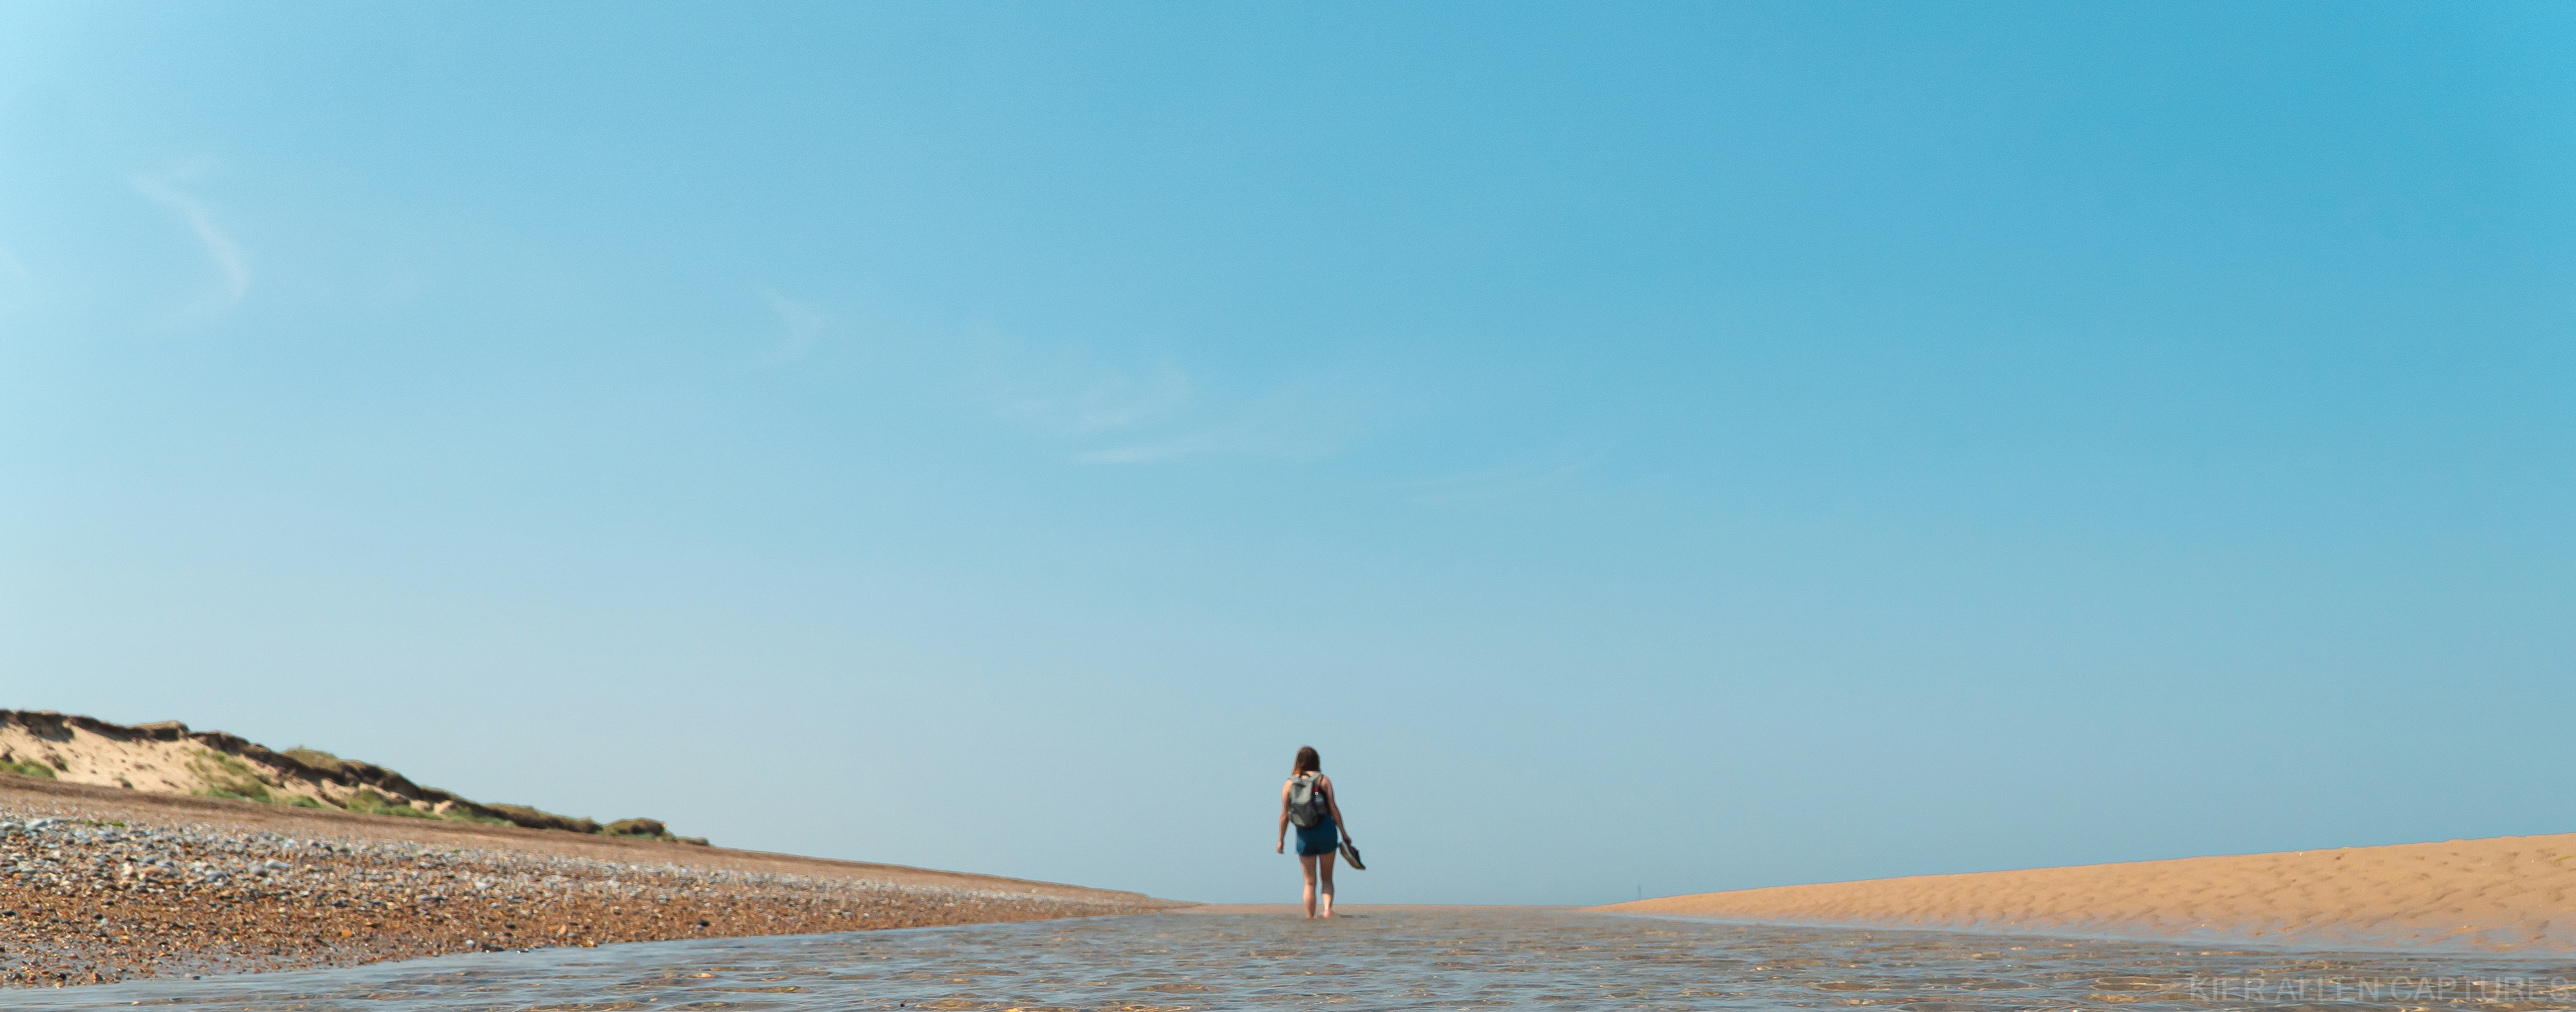 woman in black dress walking on brown sand during daytime